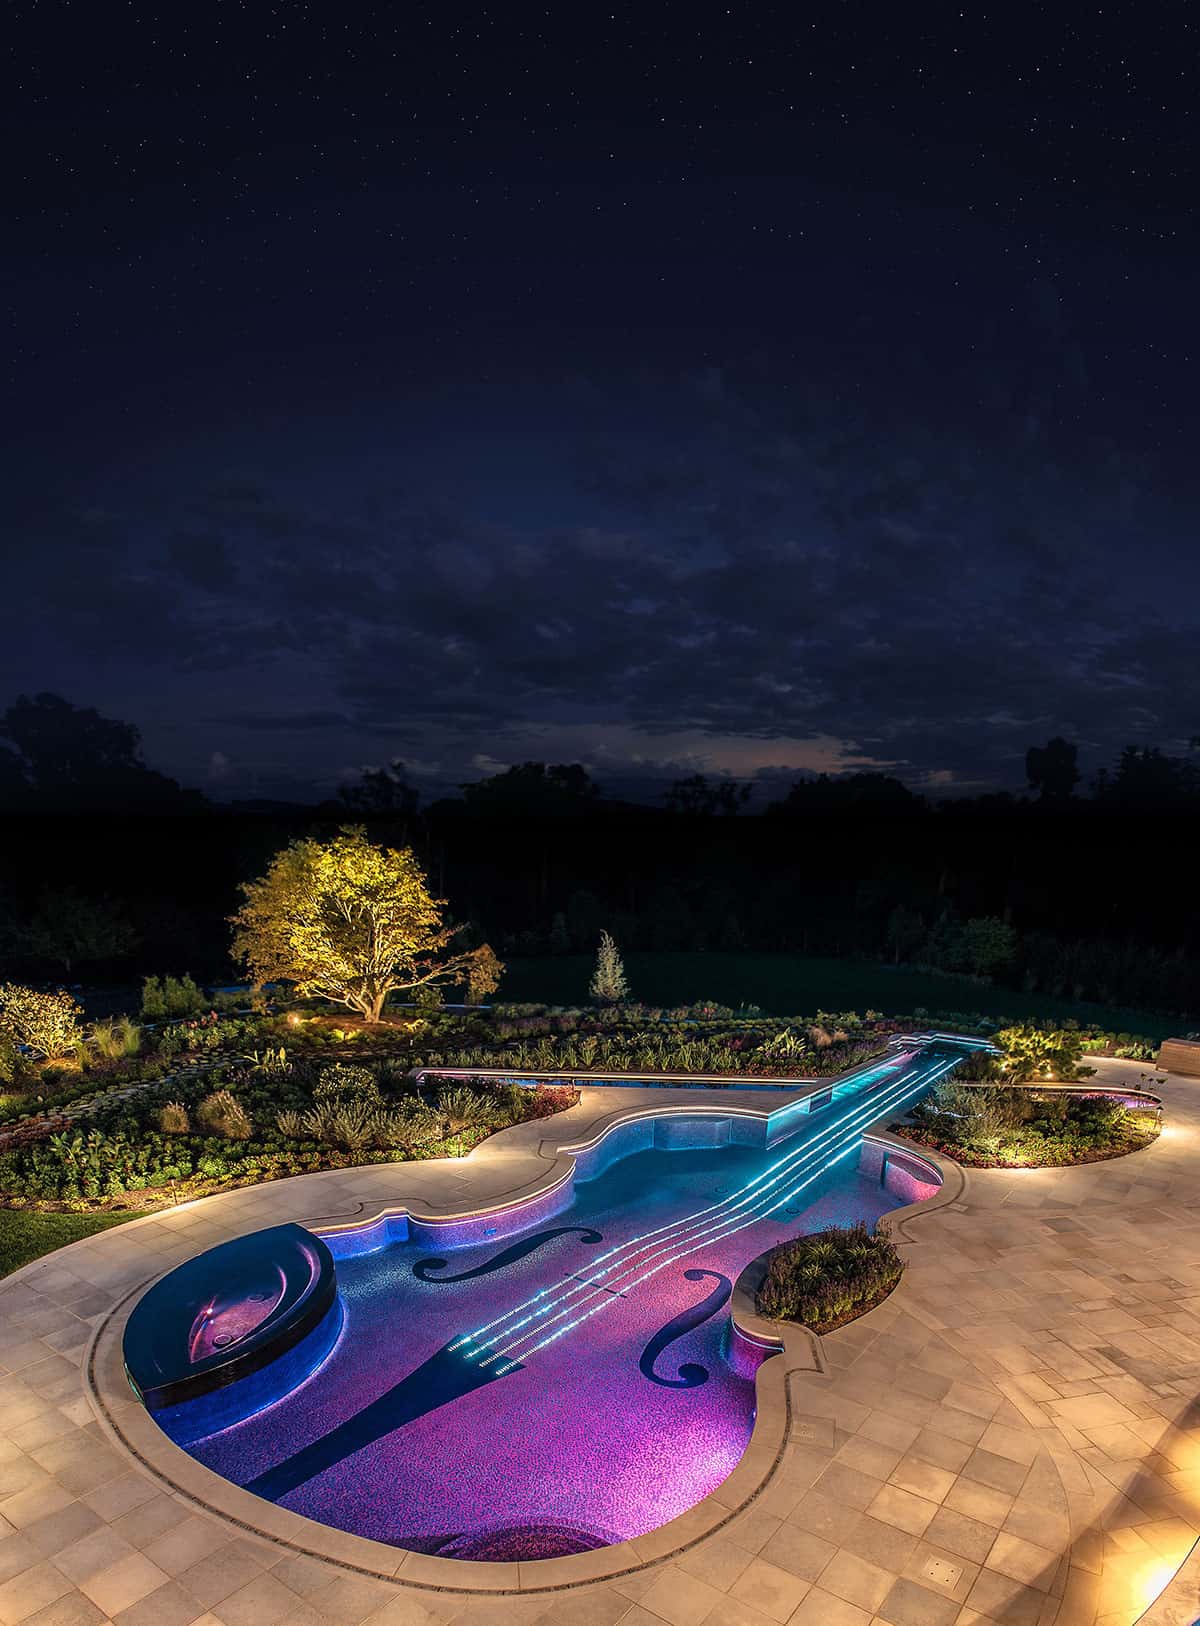 award-winning-stradivarius-violin-pool-cipriano-landscape-design-20-nighttime.jpg